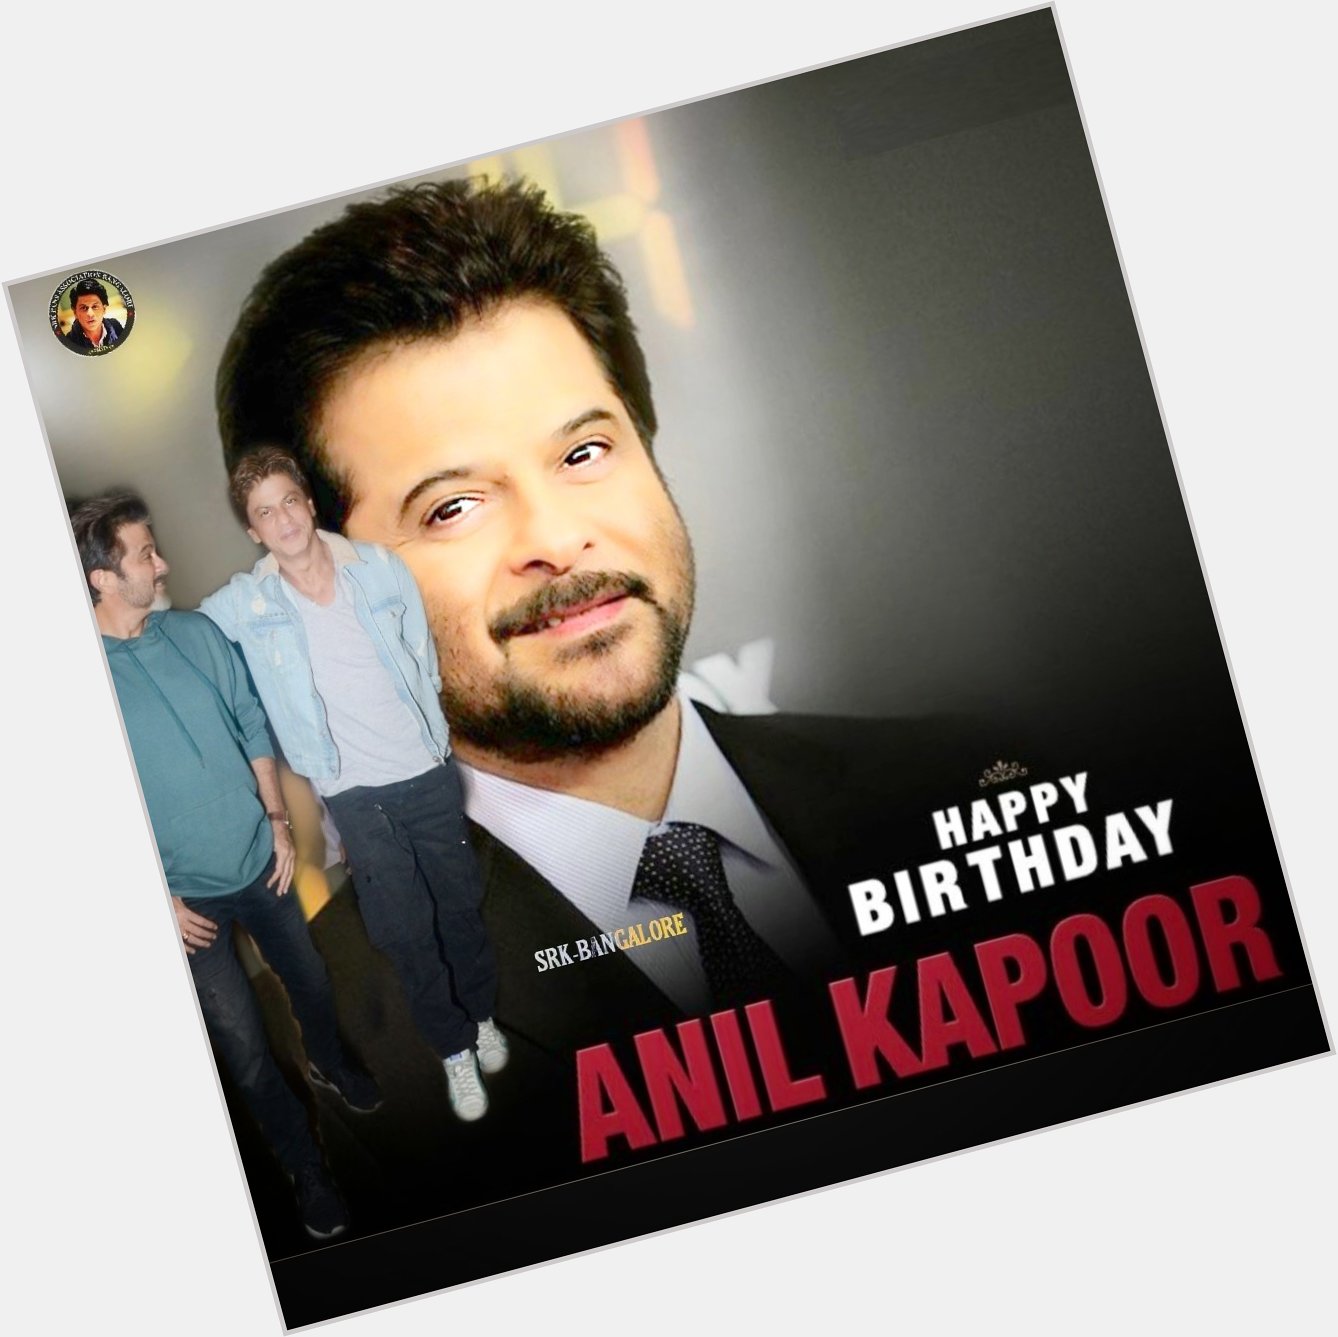 Wish you Happy birthday Legend Anil Kapoor sir ji 